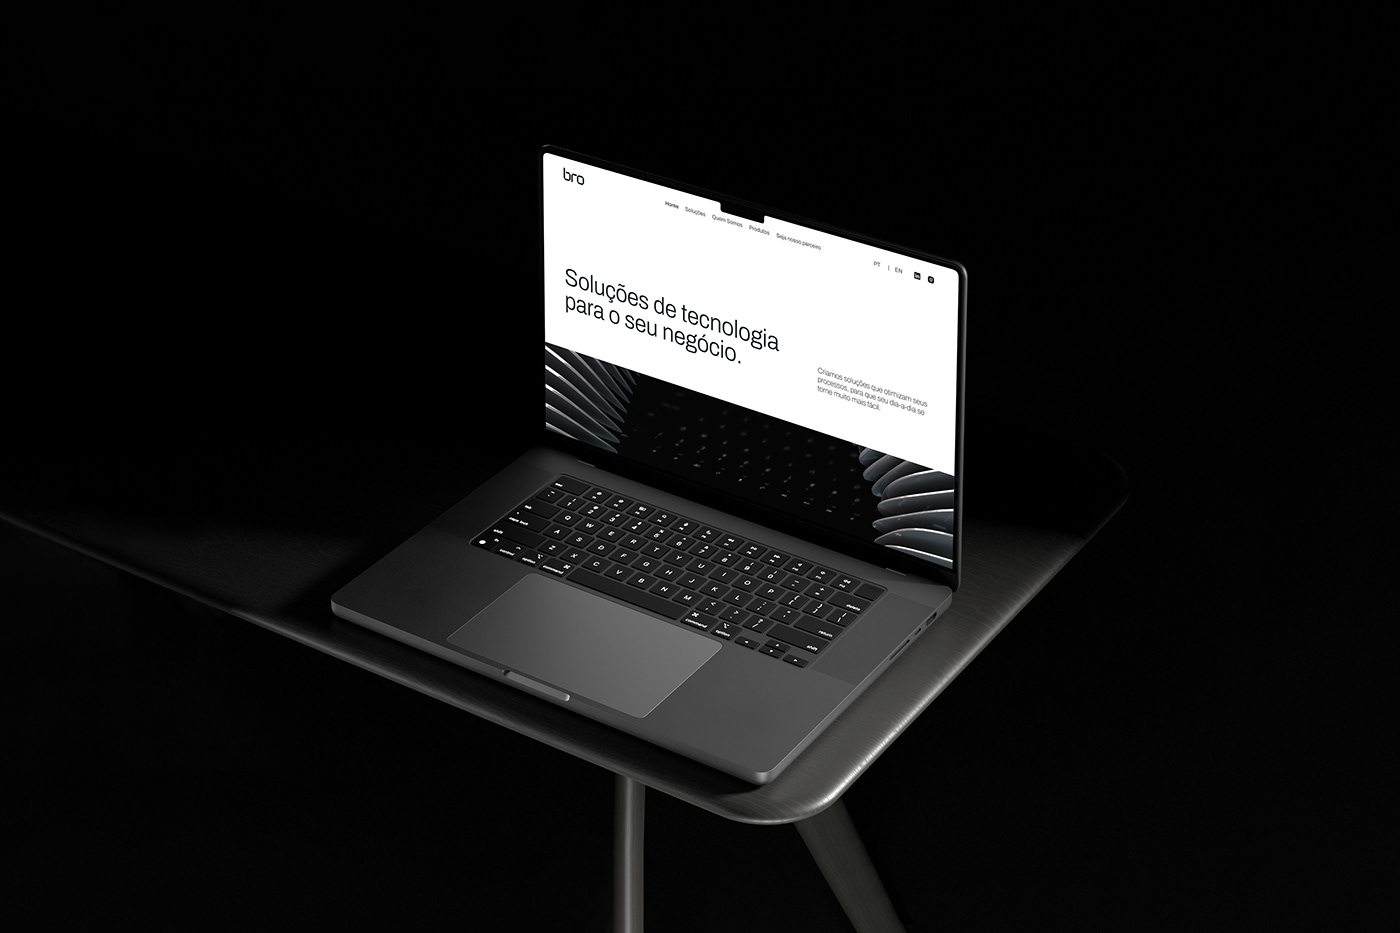 design Technology tech Data business brand identity minimalist modern